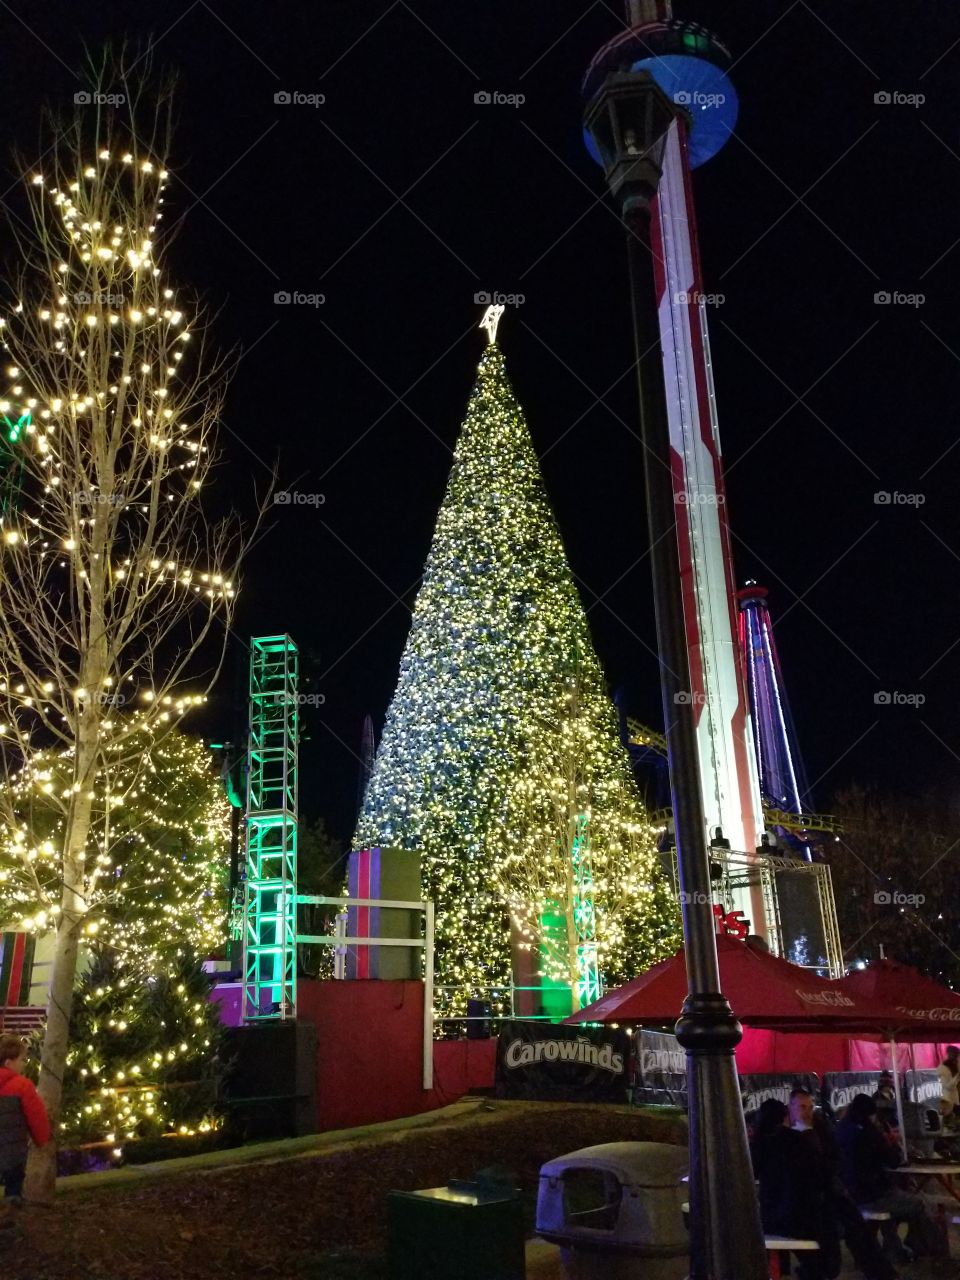 Carowinds Christmas time celebration. Christmas tree and lights.